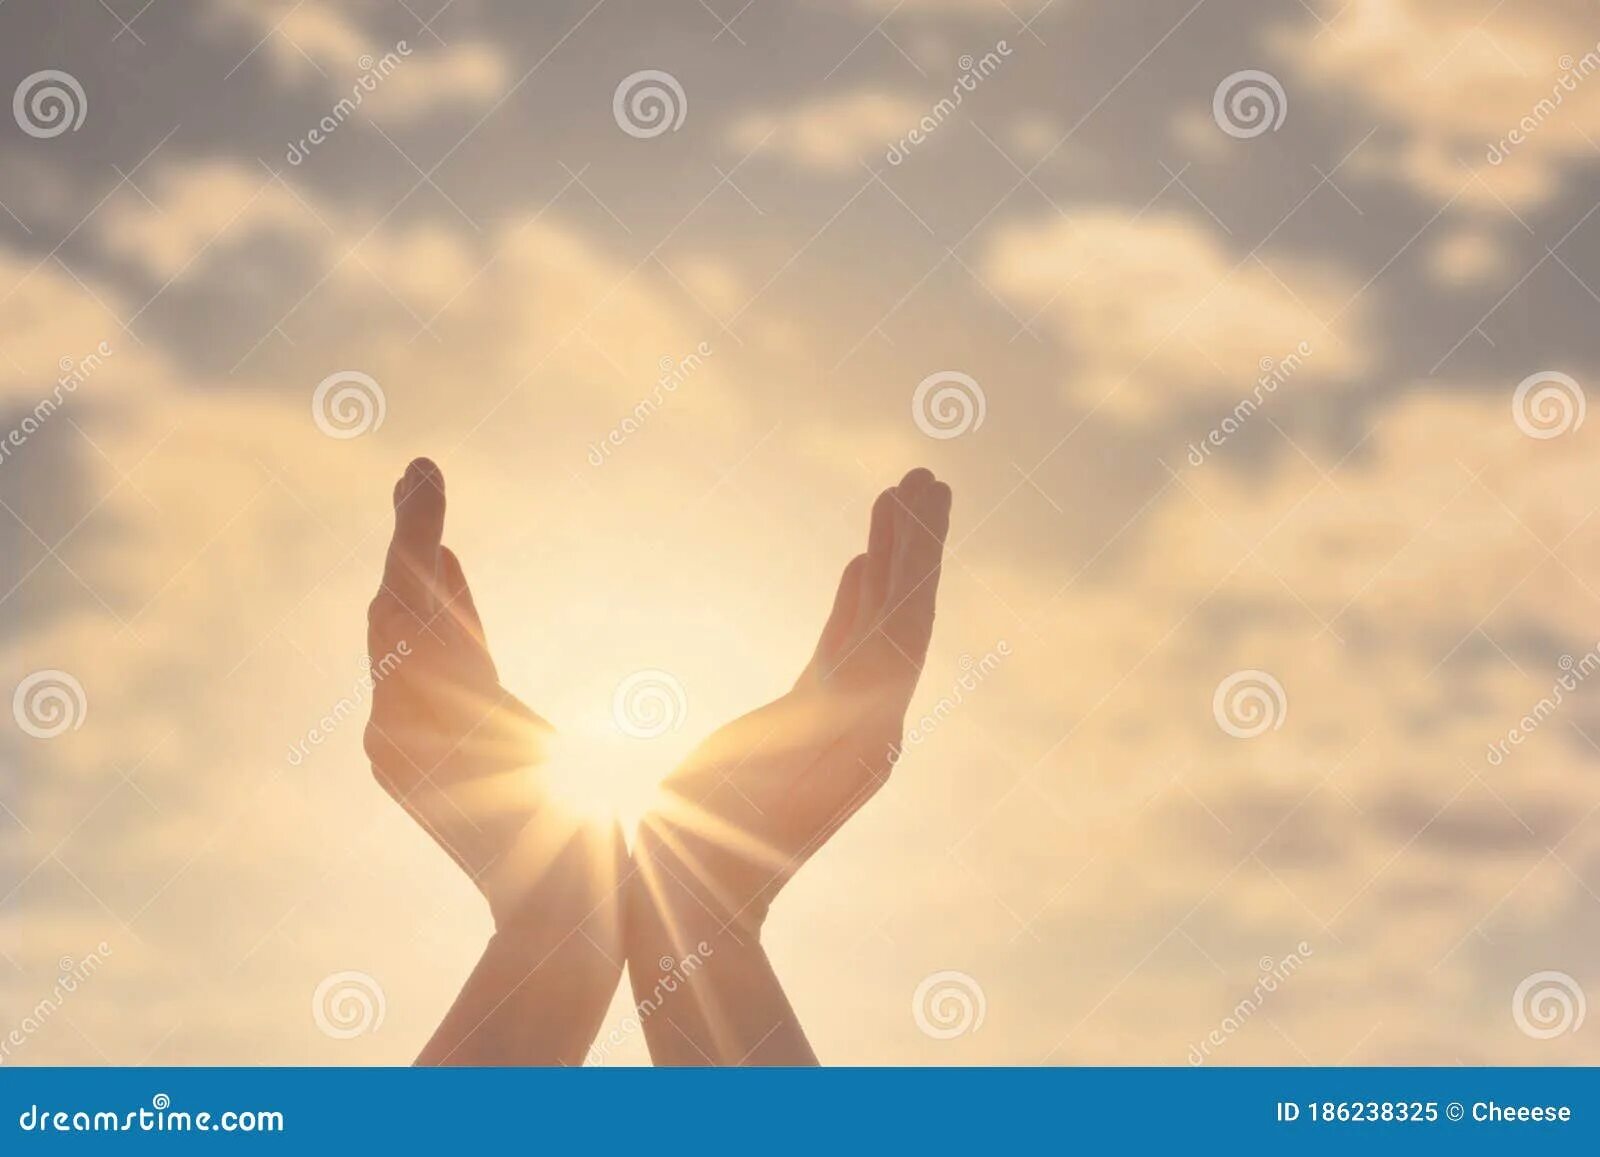 Солнце в руках. Руки держат солнце. Женские руки и солнце Графика. Прикрывается рукой от солнца.